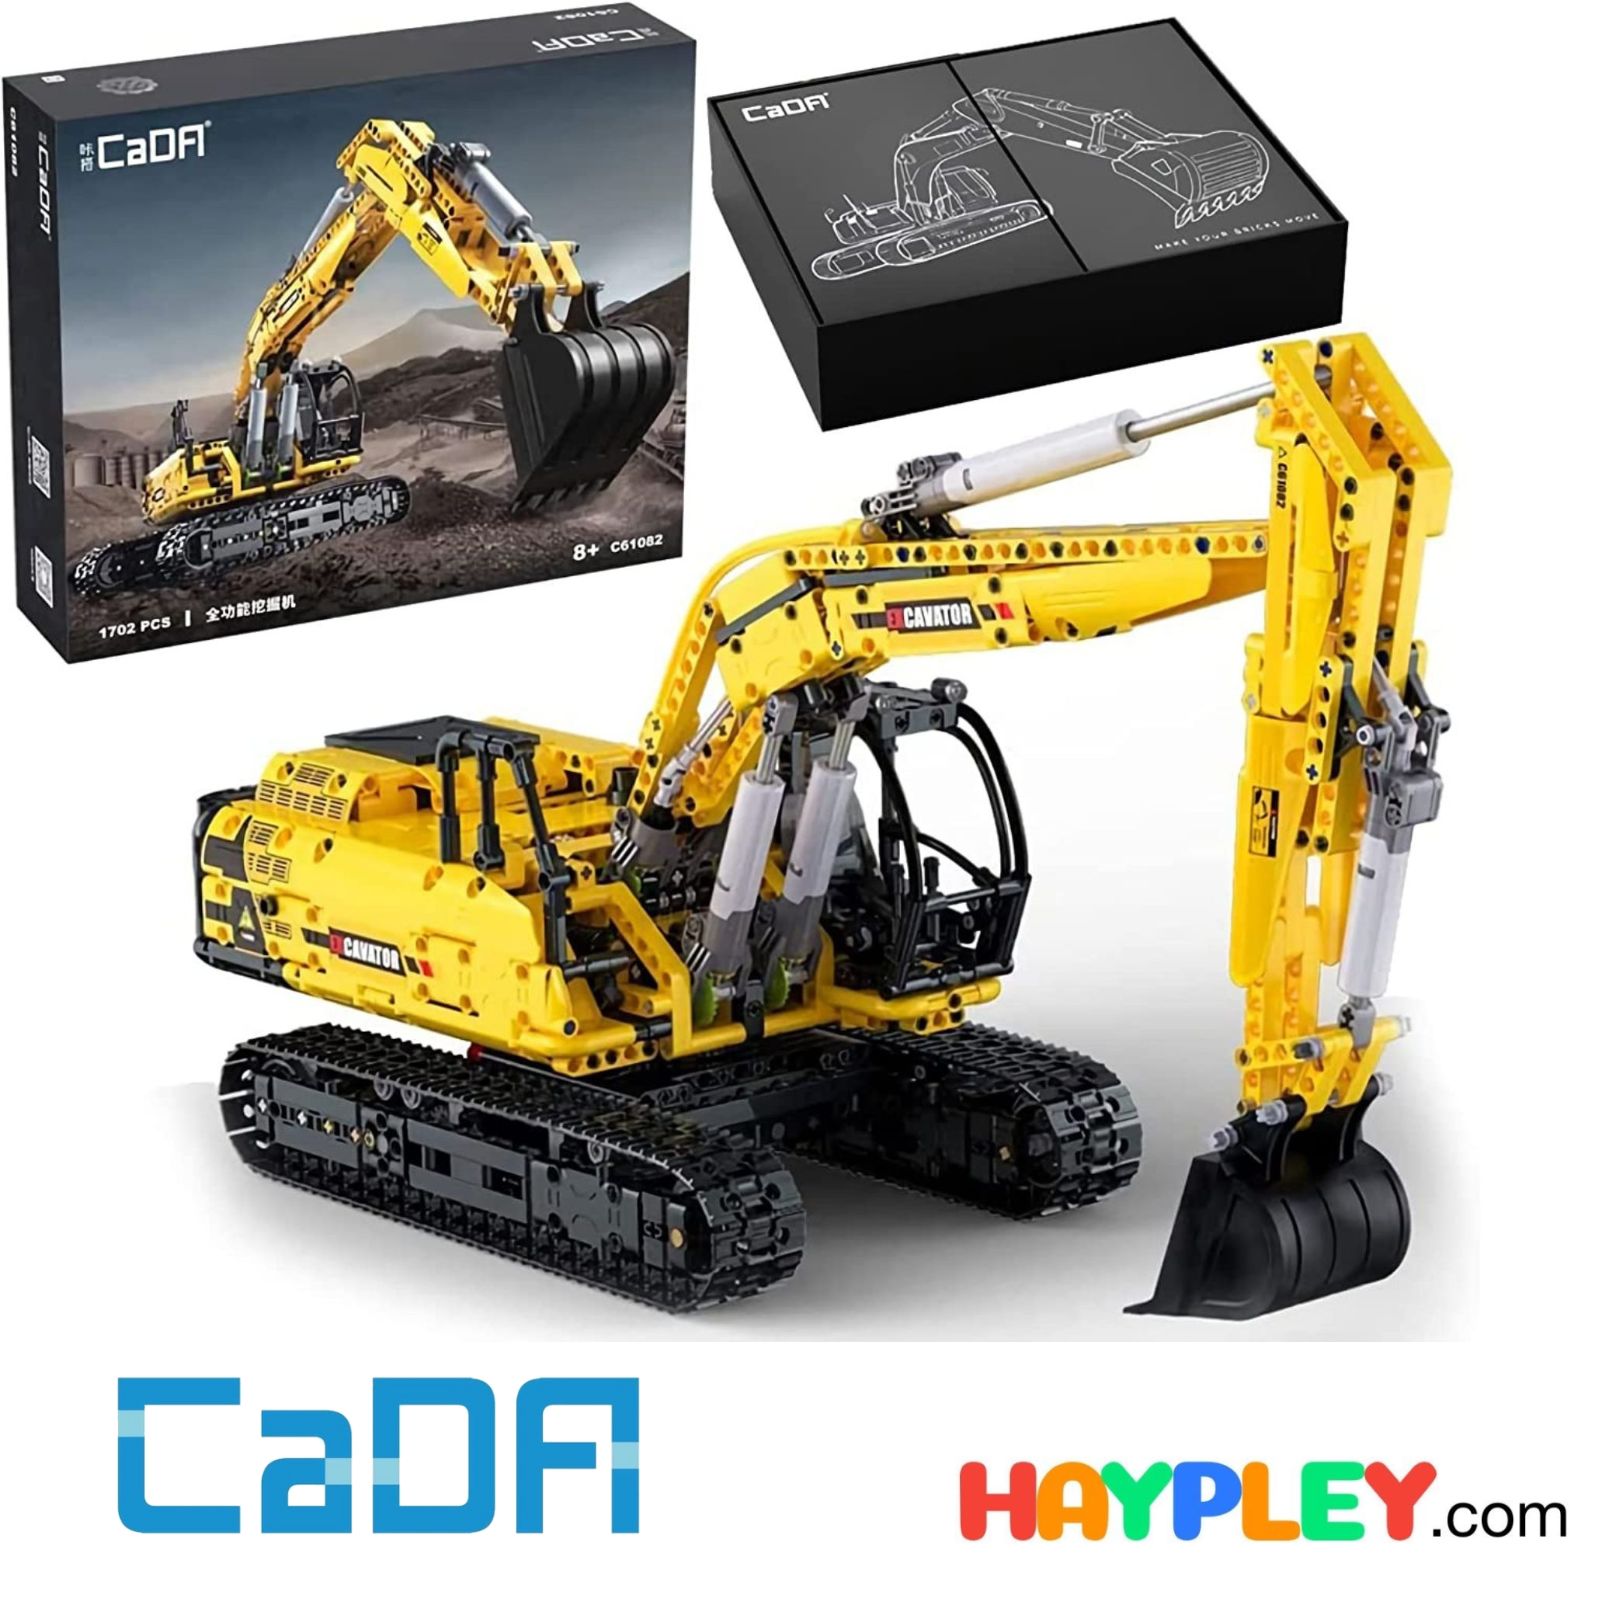 Heavy Excavator CaDA Master C61082 Building Kit 1702 pieces LEGO Technic